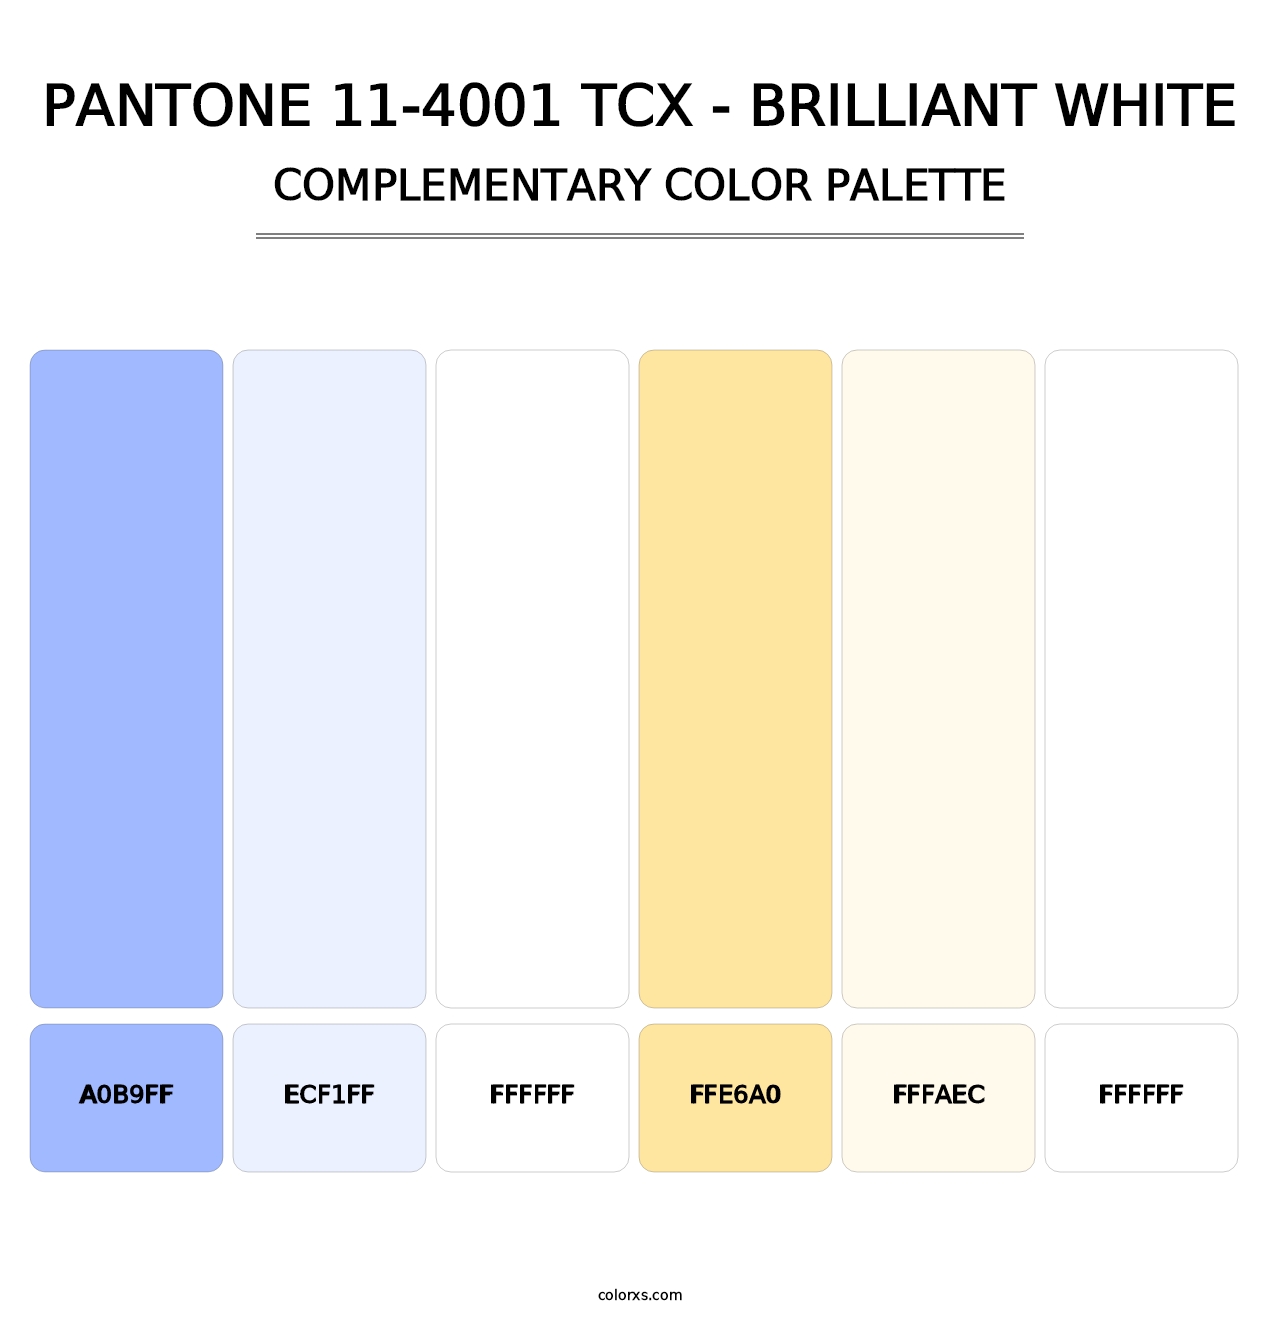 PANTONE 11-4001 TCX - Brilliant White - Complementary Color Palette